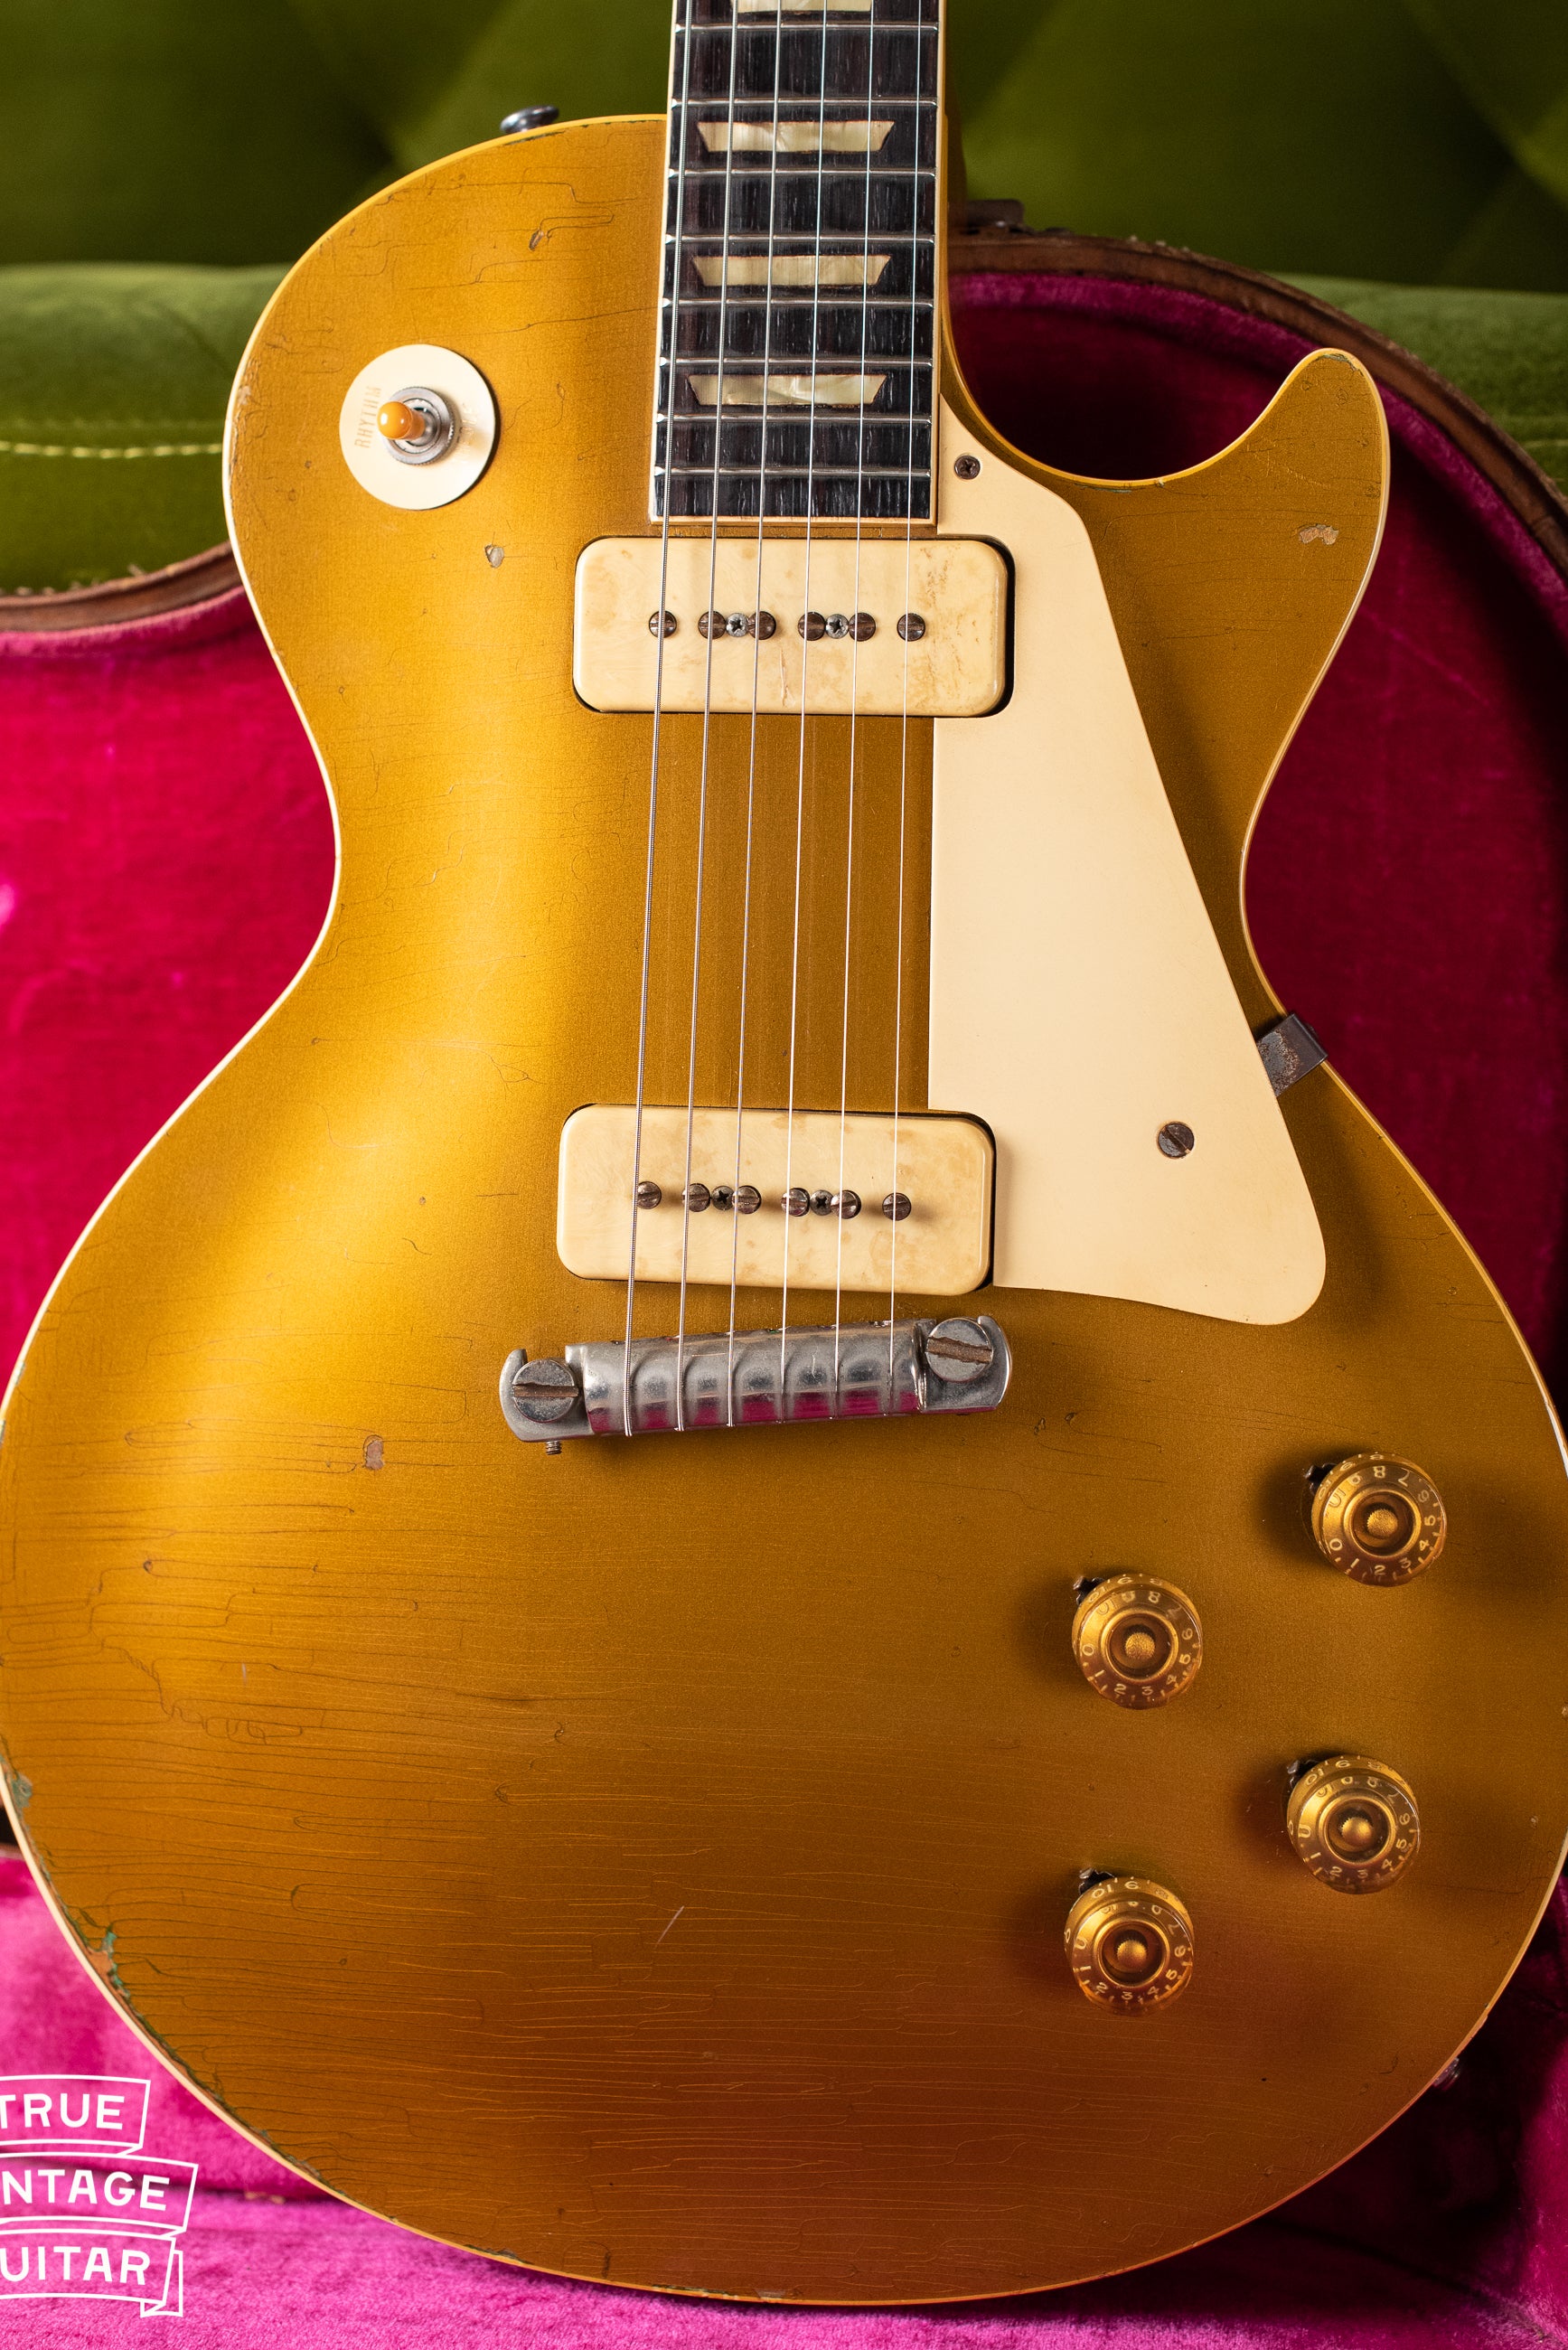 Vintage 1954 Gibson Les Paul goldtop electric guitar